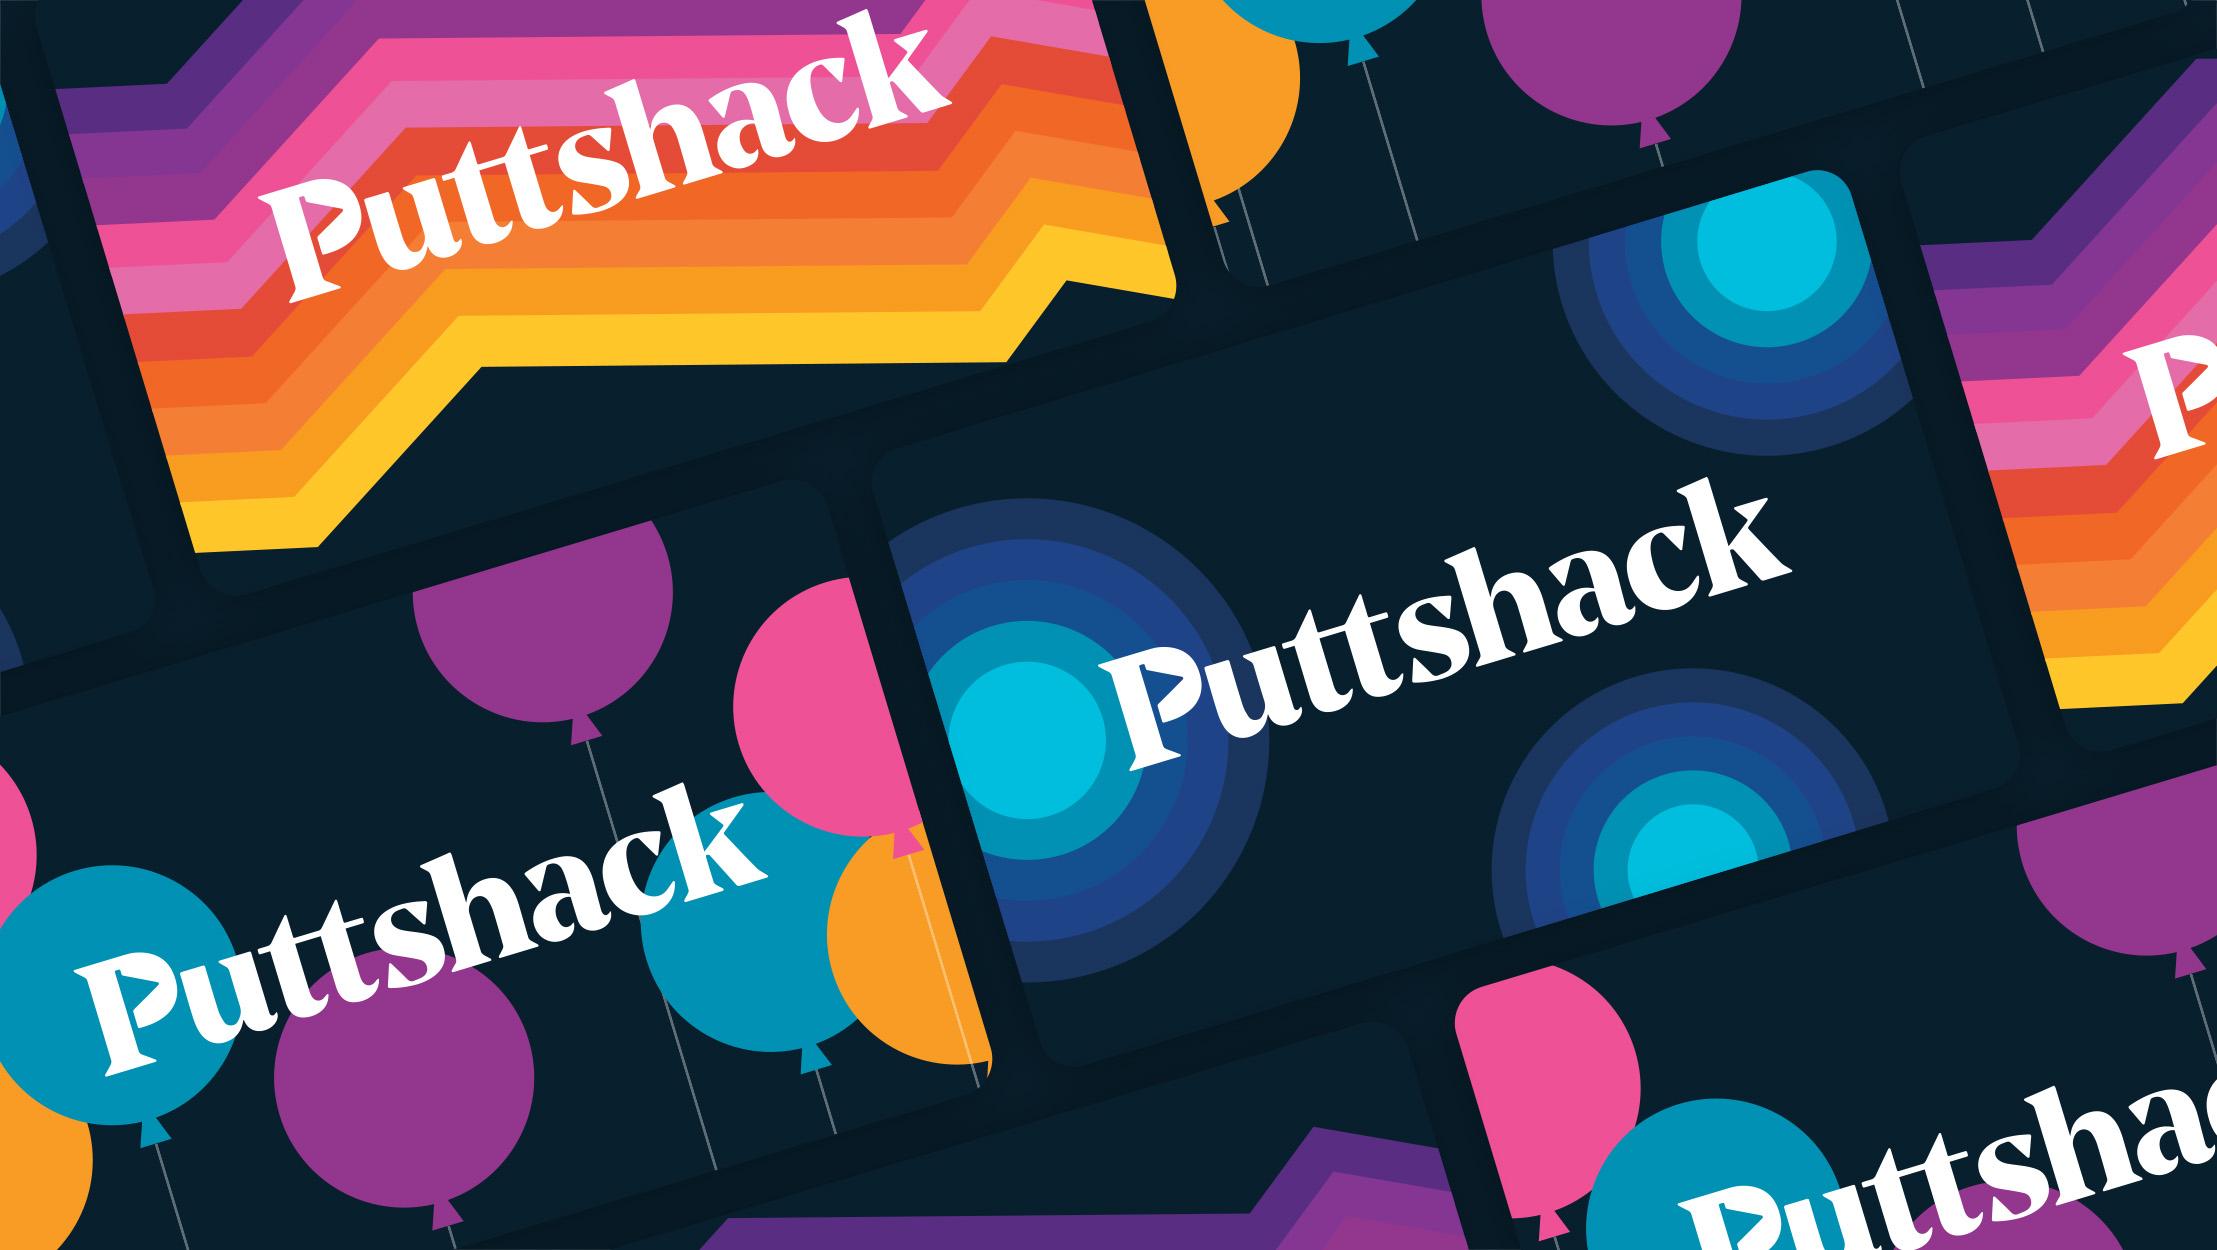 Puttshack gift card designs